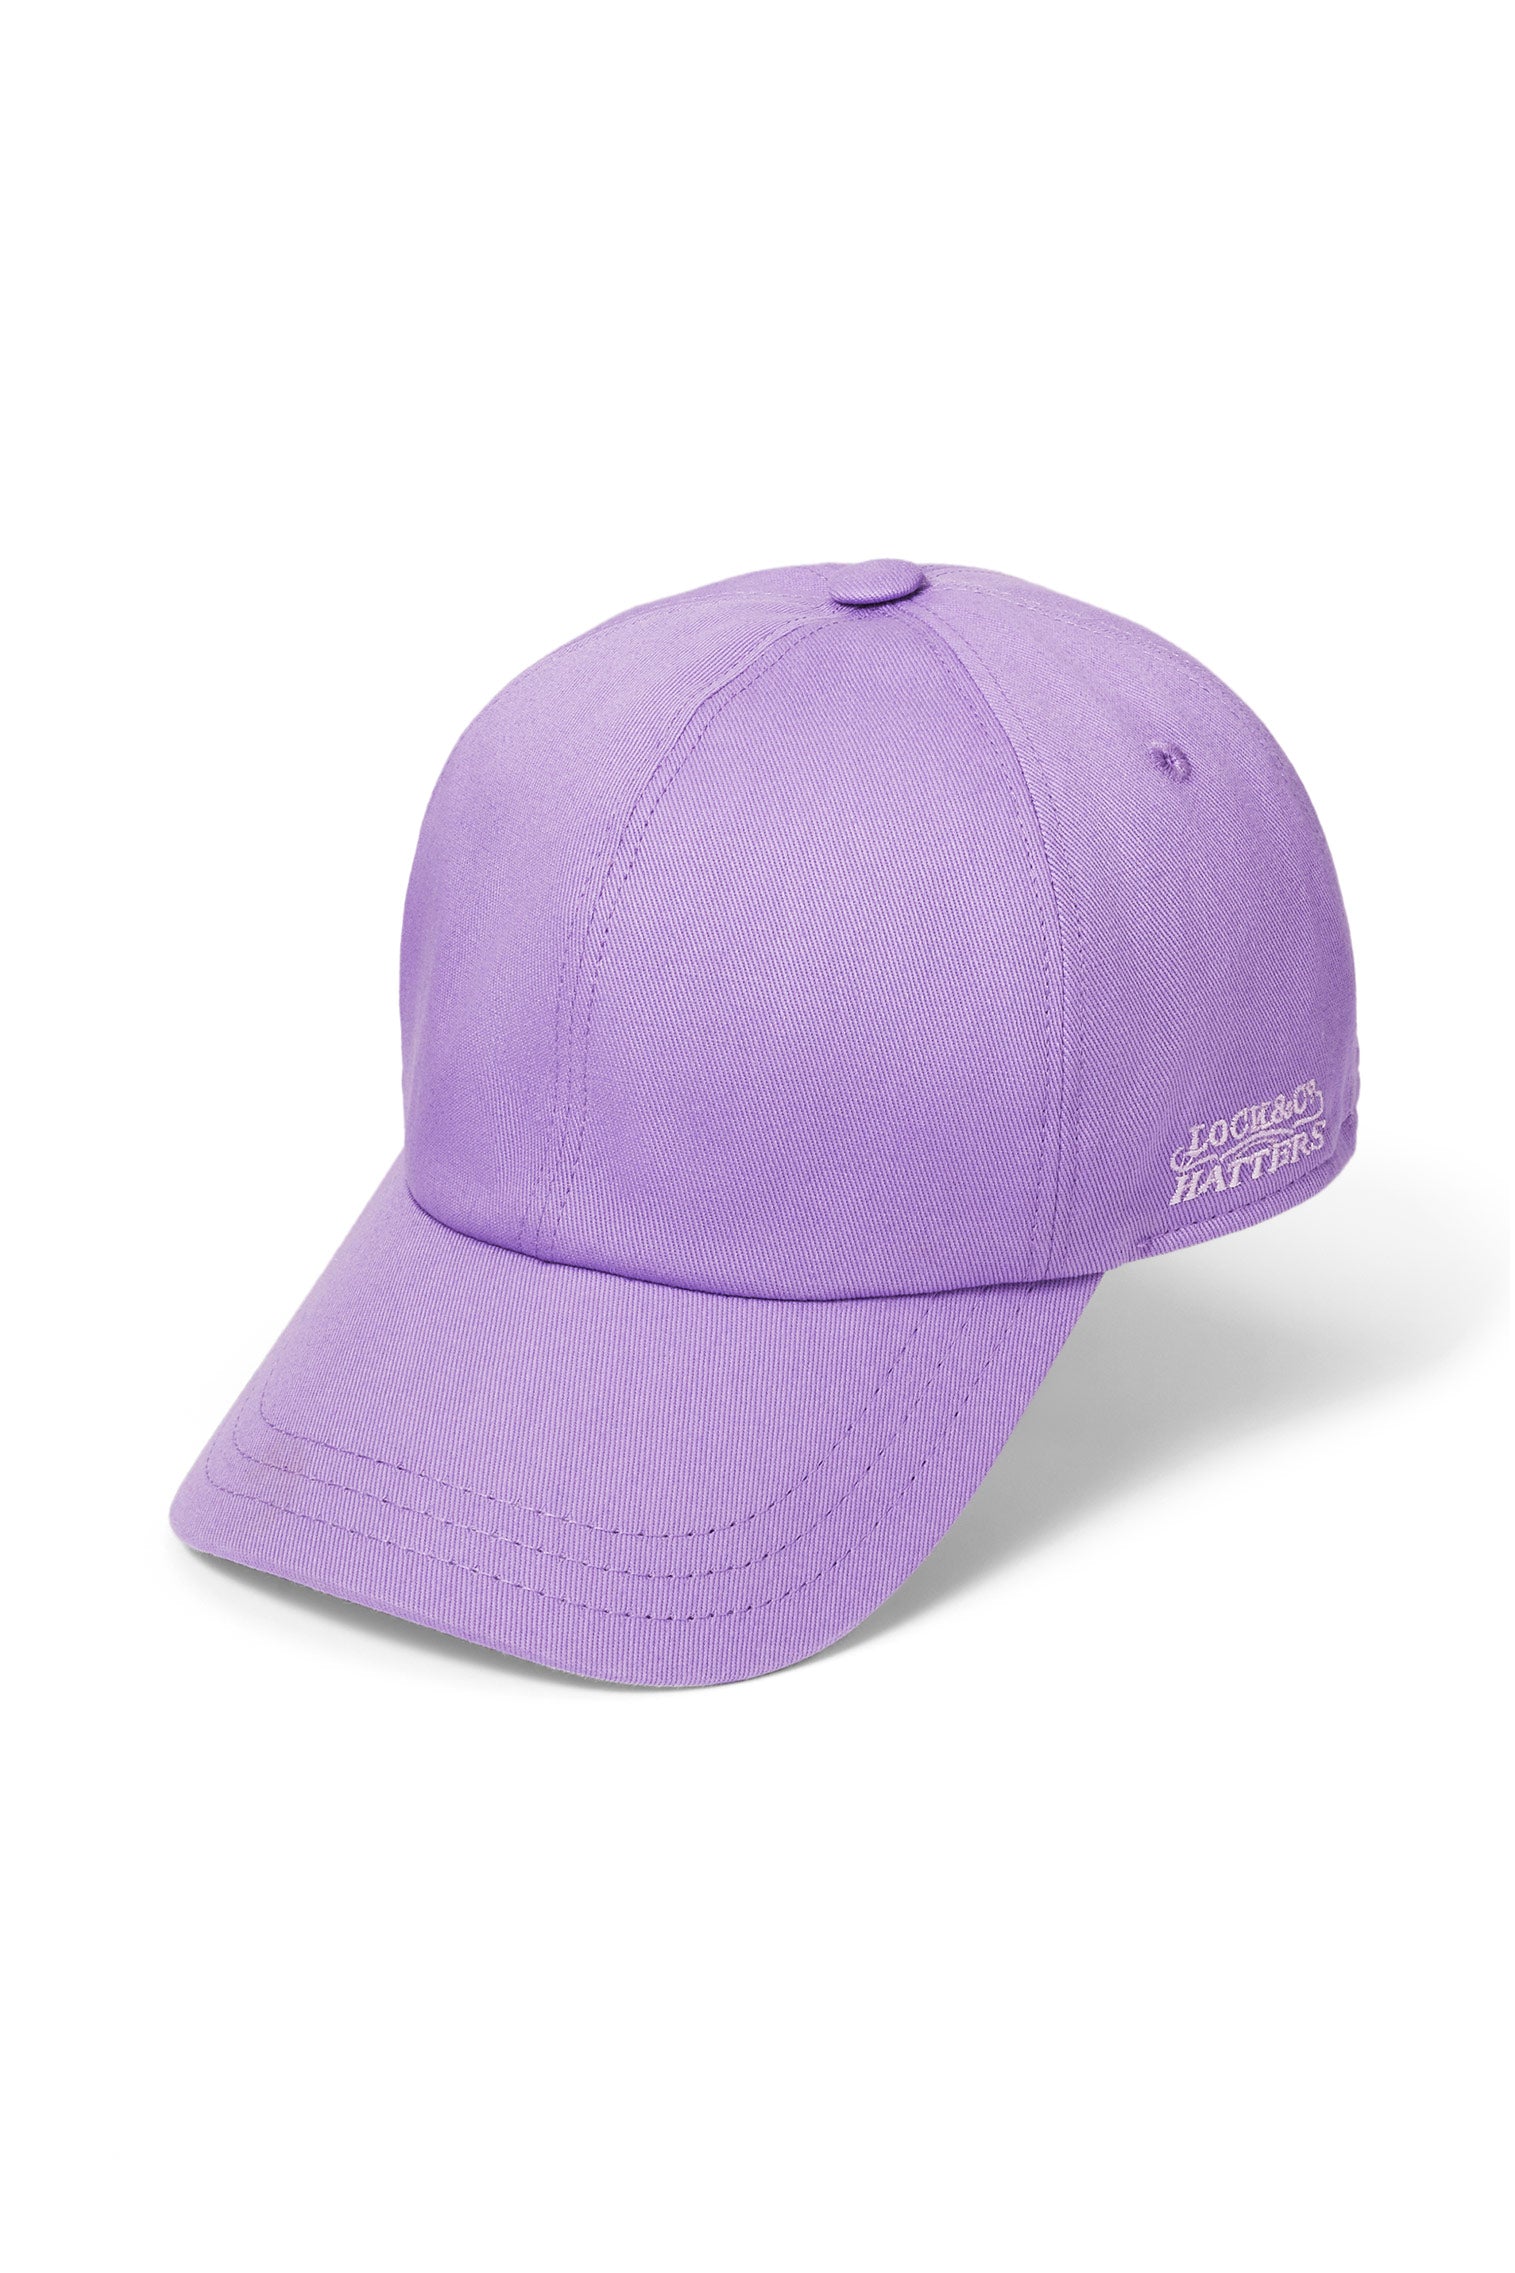 Adjustable Purple Baseball Cap - Caps - Lock & Co. Hatters London UK